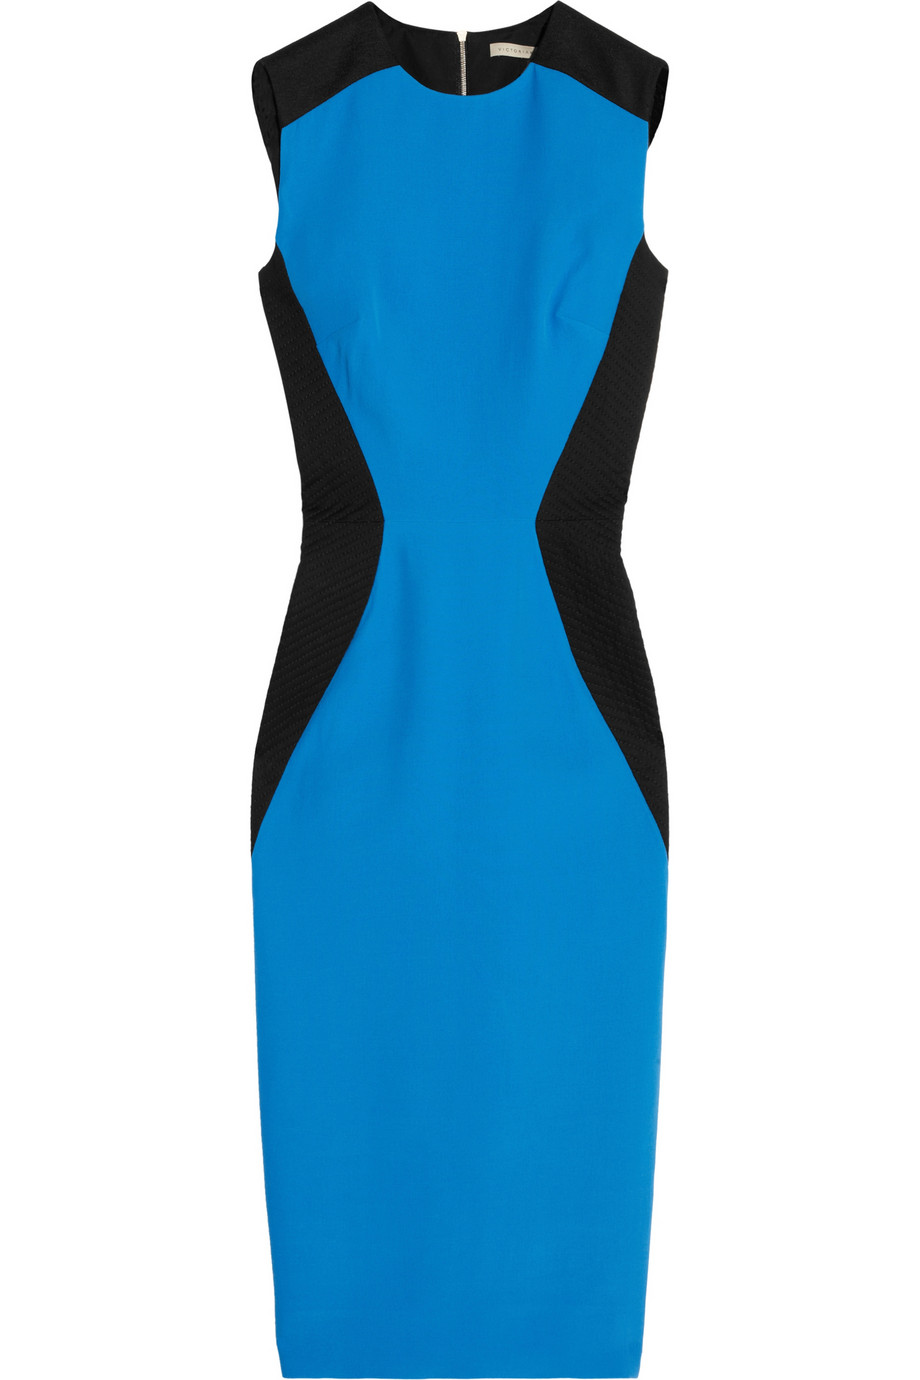 Victoria beckham Sleeveless Pencil Dress in Blue | Lyst